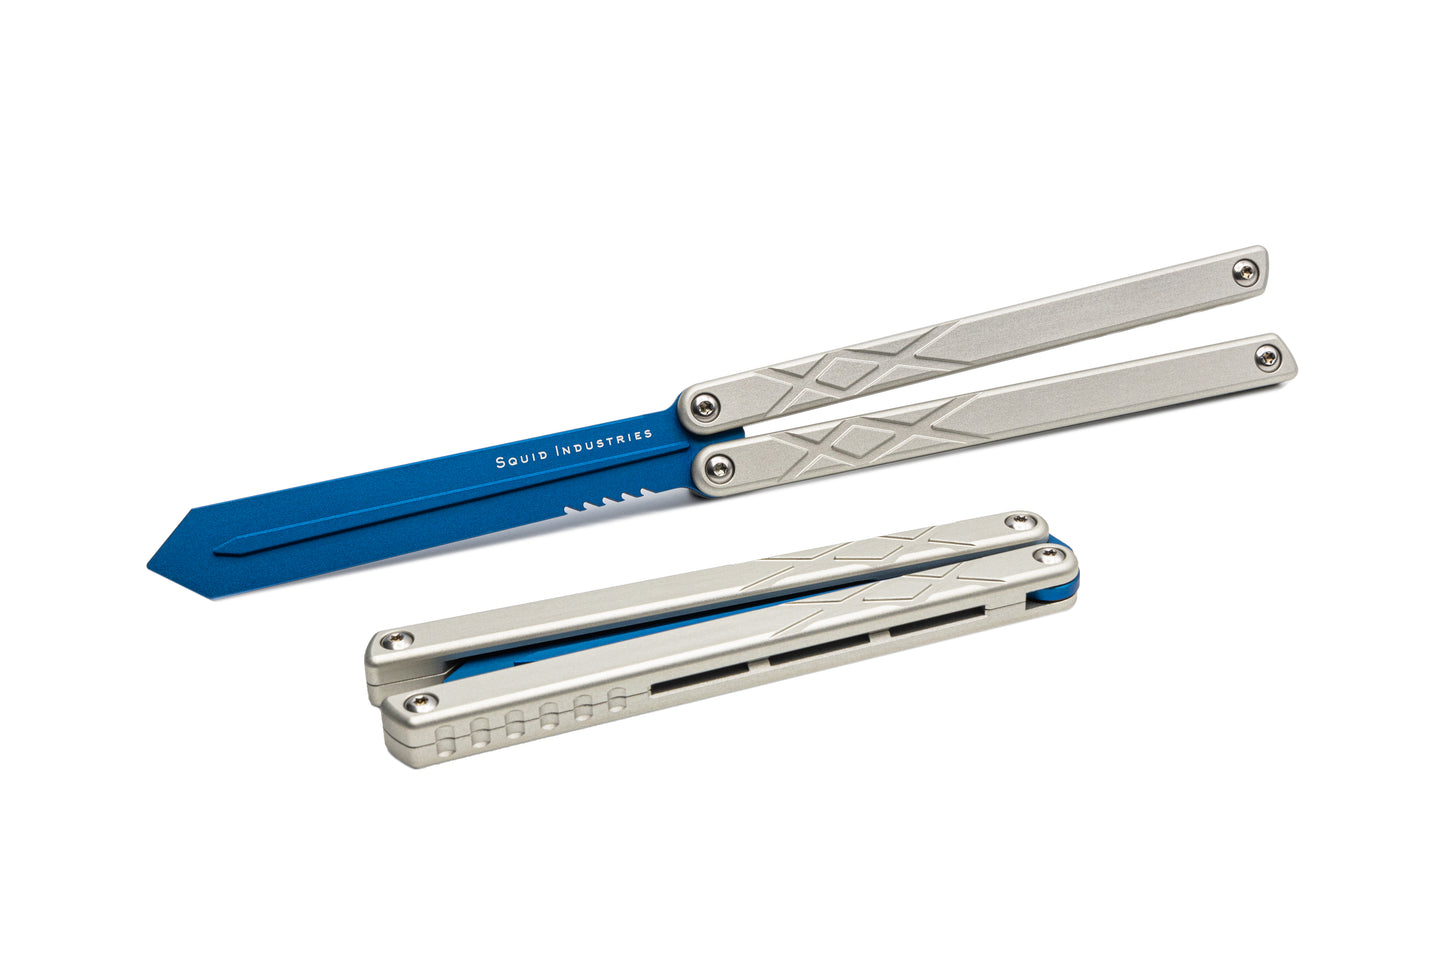 blue blade silver handles silver hardware swordfish balisosng butterfly knife trainer fidget toy